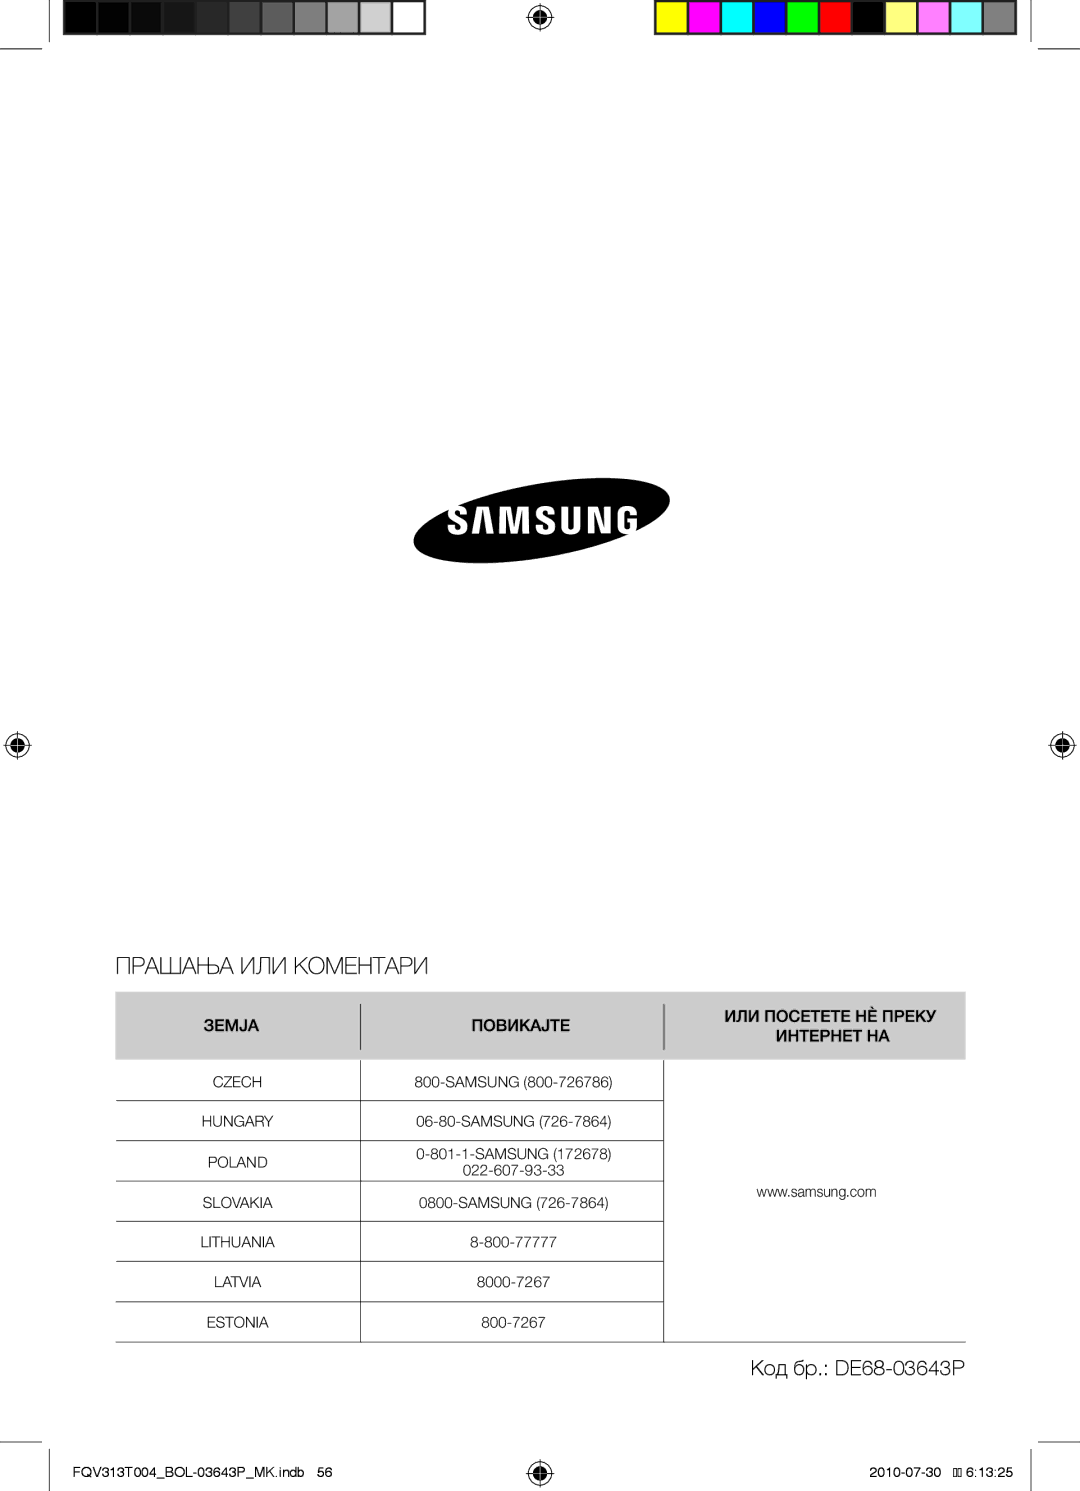 Samsung FQV313T004/BOL manual Код бр. DE68-03643P 